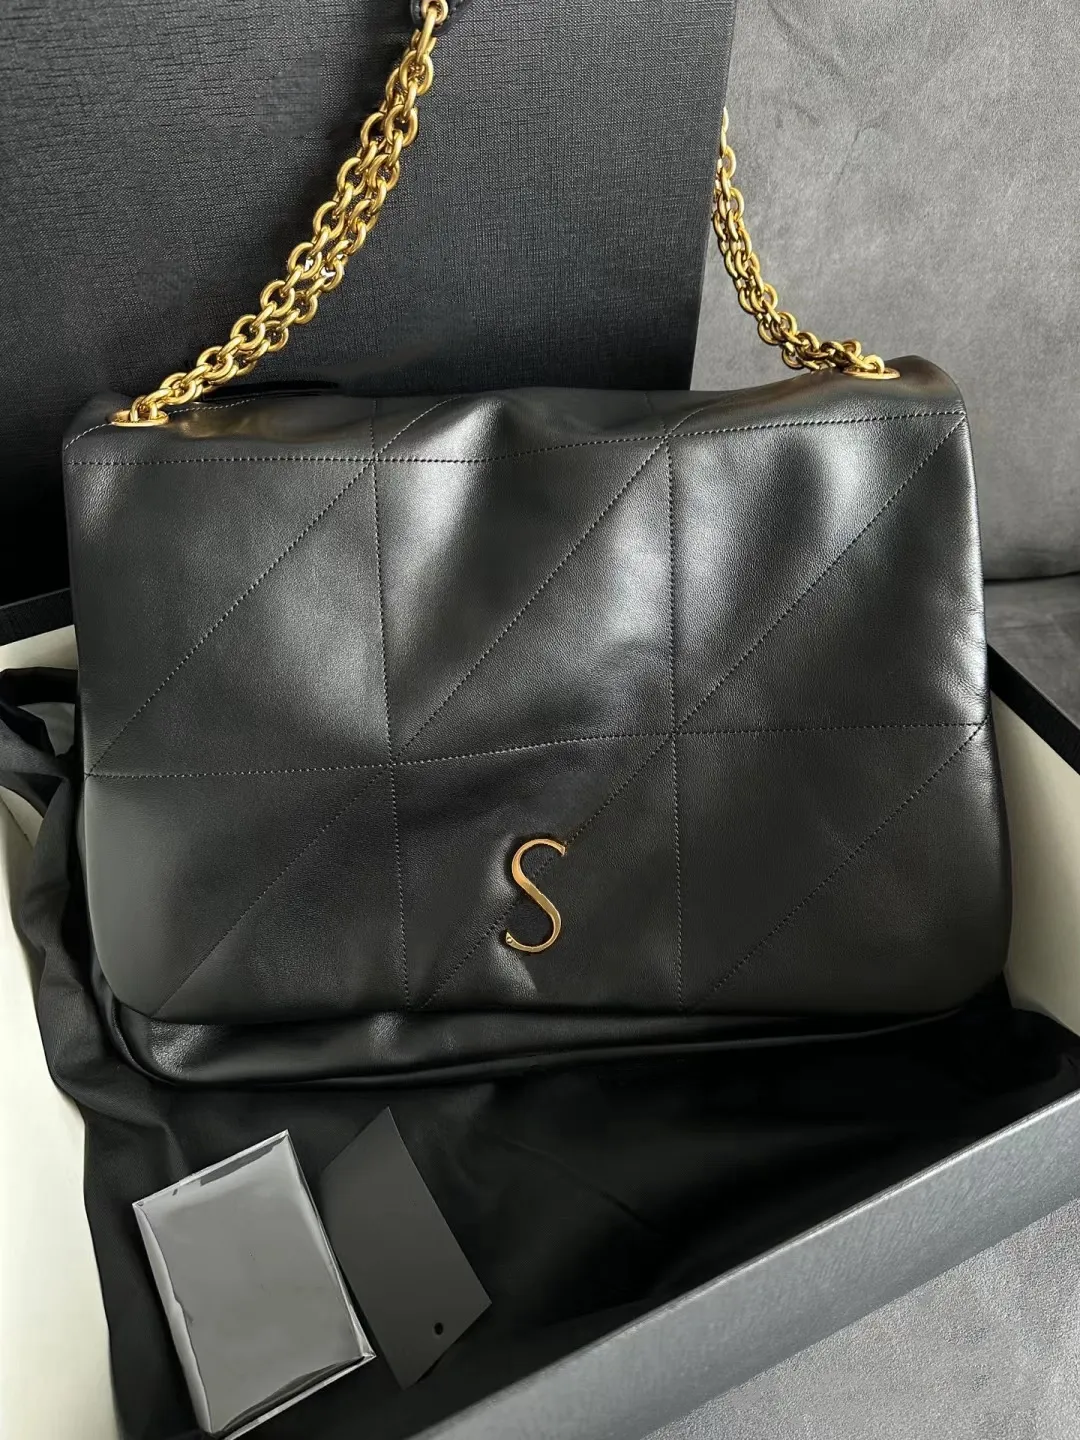 Should I buy the Saint Laurent Jamie bag? : r/handbags